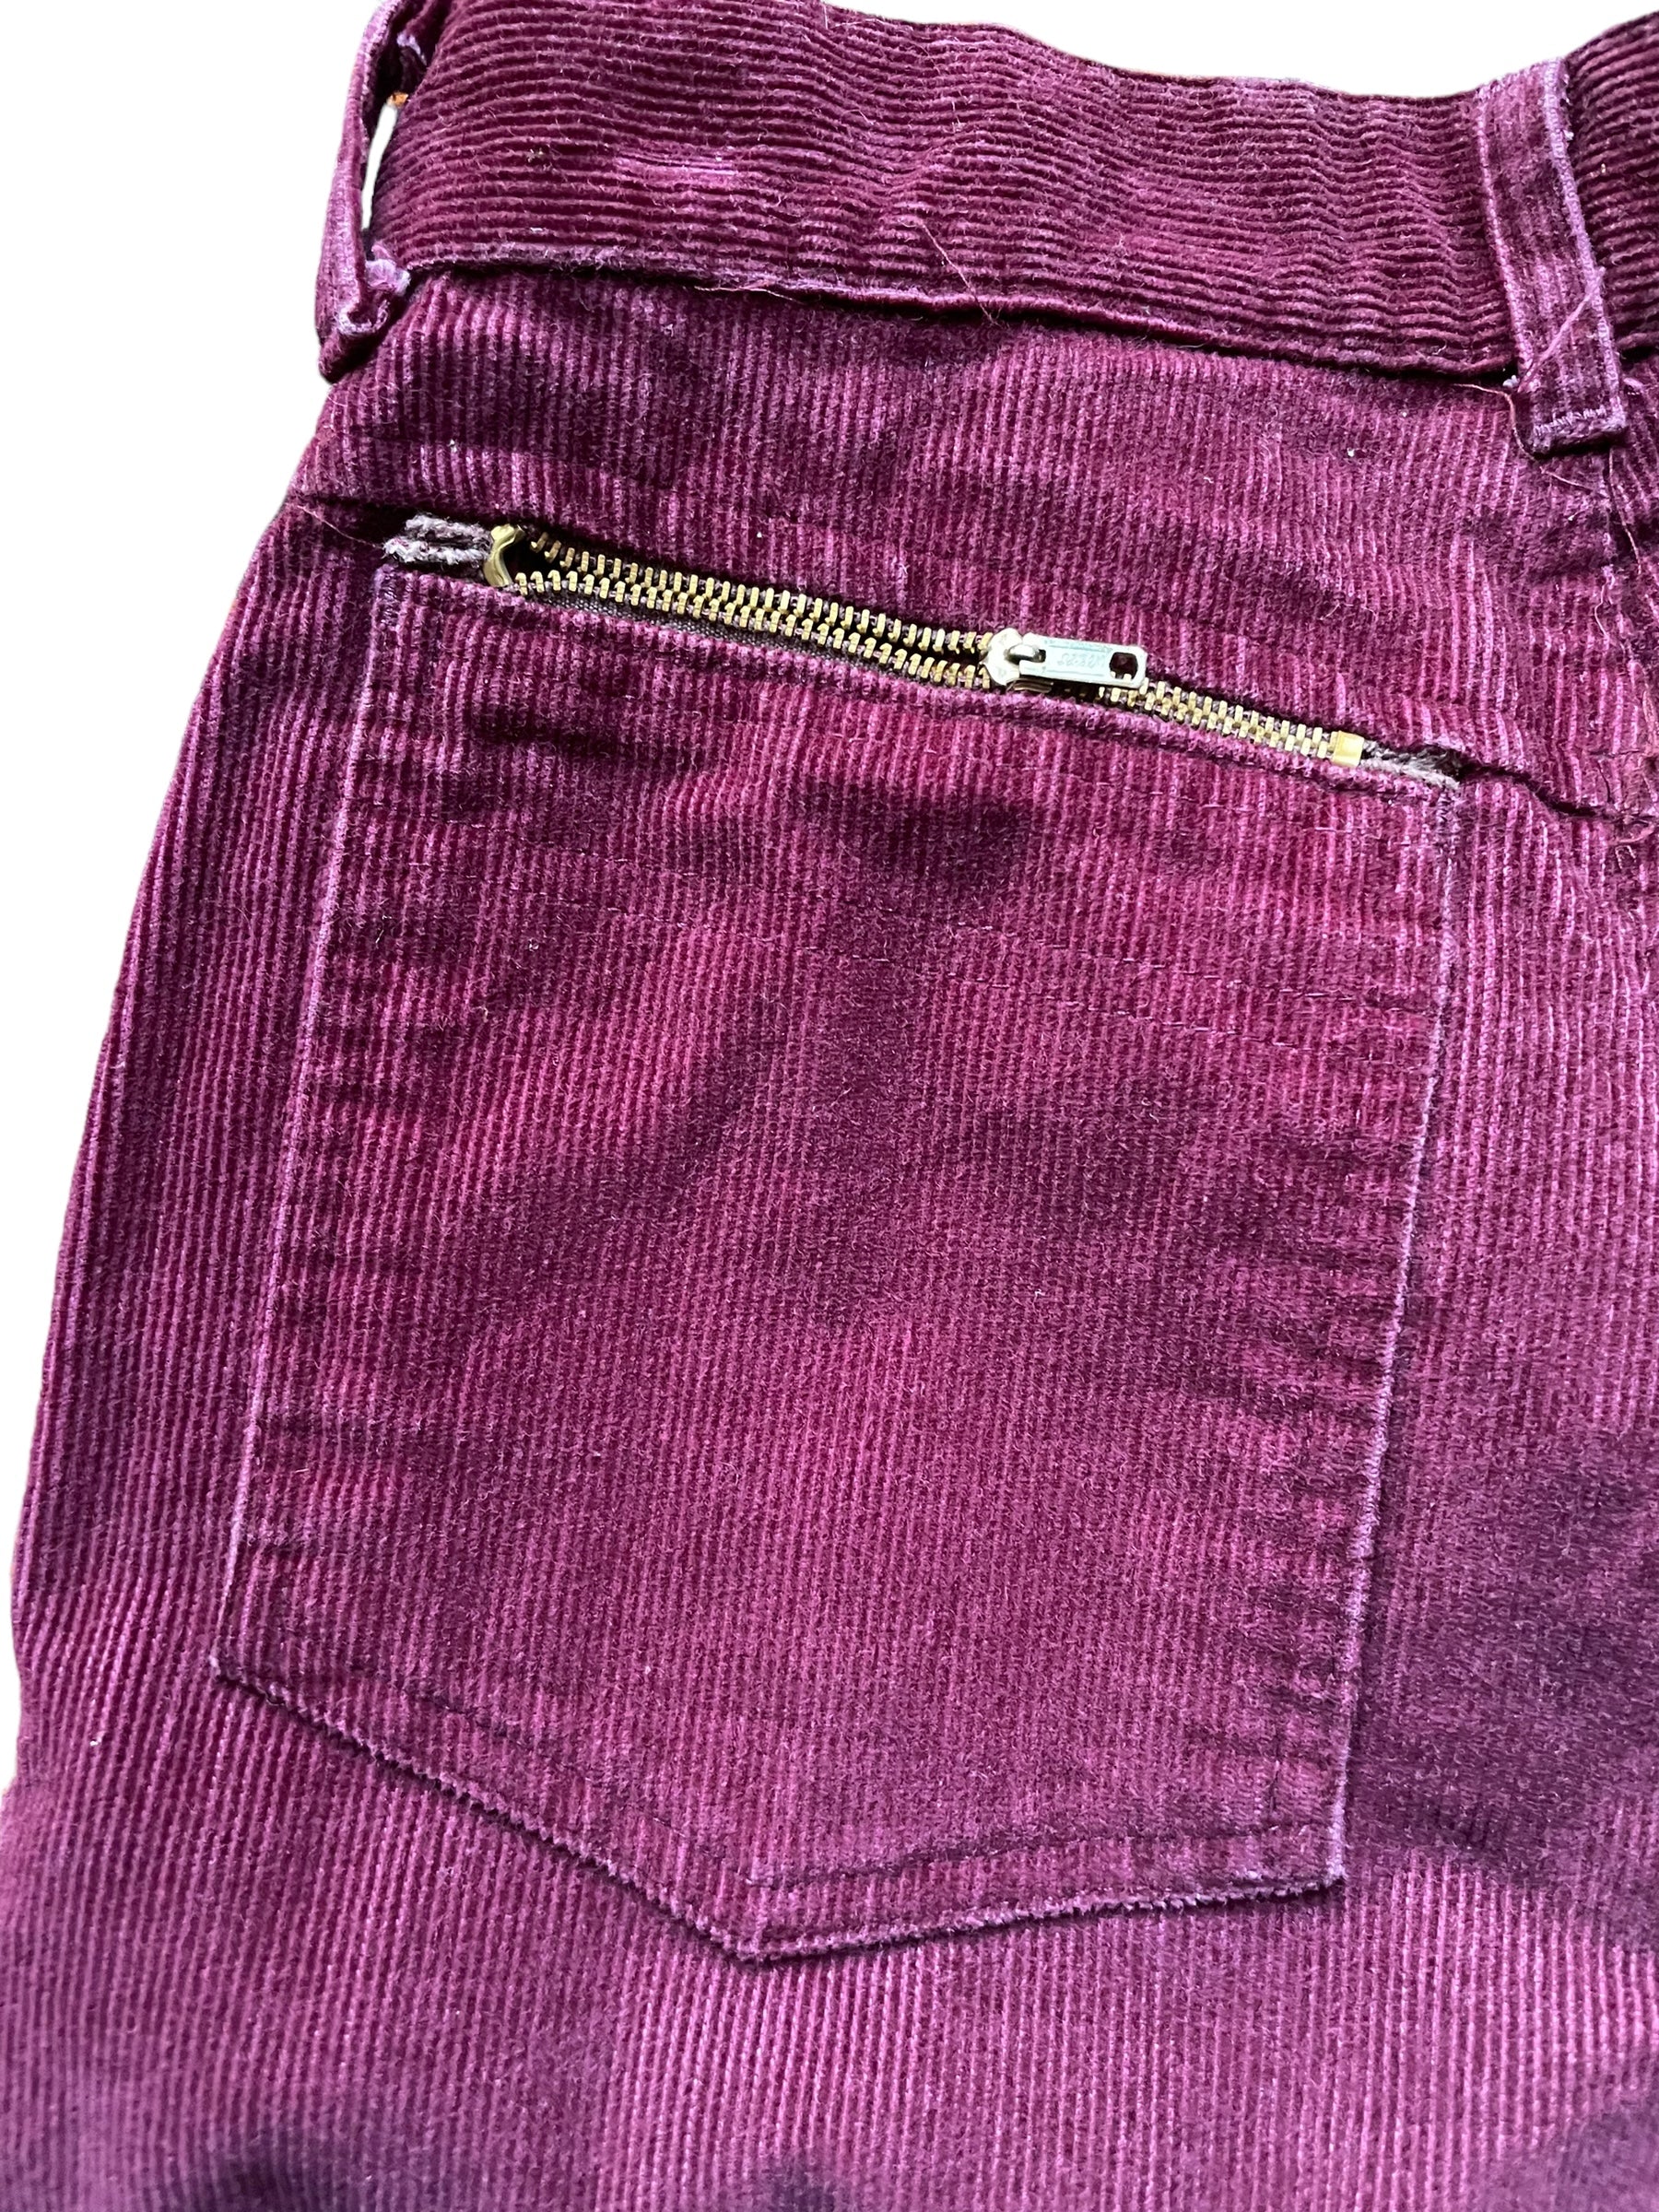 Back left pocket view of Vintage 1970s Calvin Klein Corduroy Pants W26 | Barn Owl Vintage Seattle | Vintage Corduroy Pants